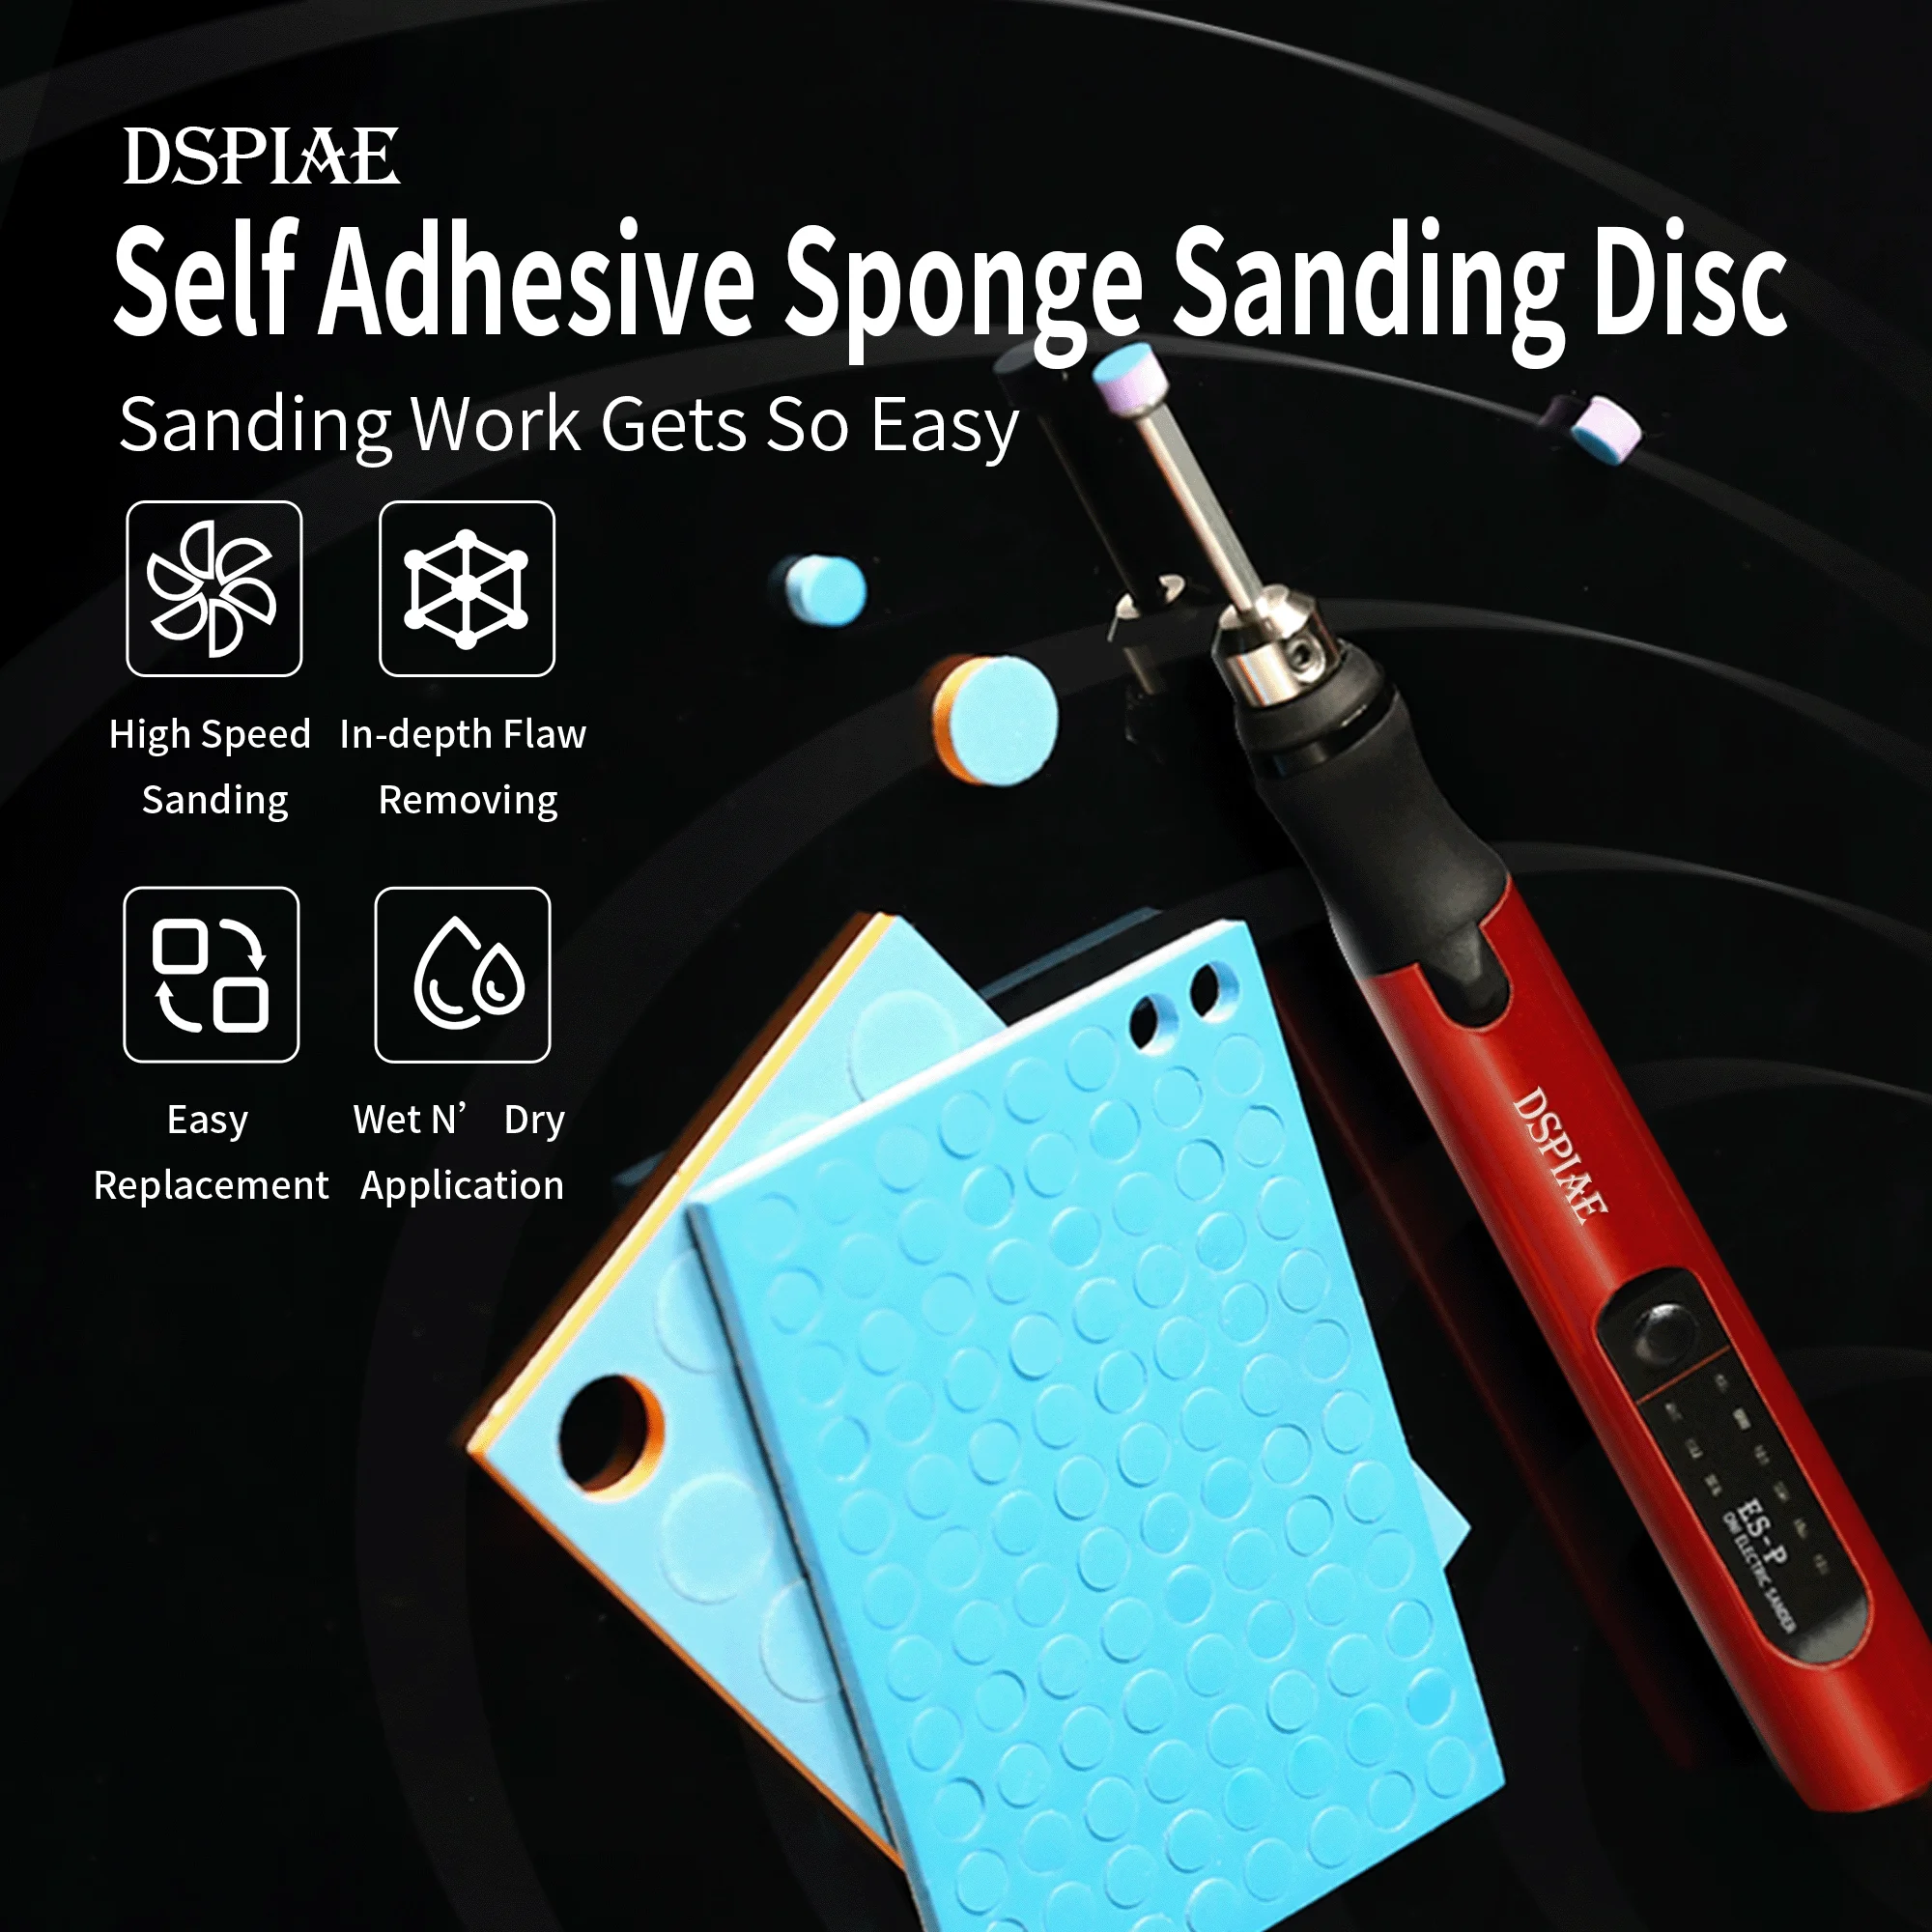 DSPIAE SS-C01 Self Adhesive Sponge Sanding Disc military model making tool assembly remodeling Gundam Hobby DIY sanding